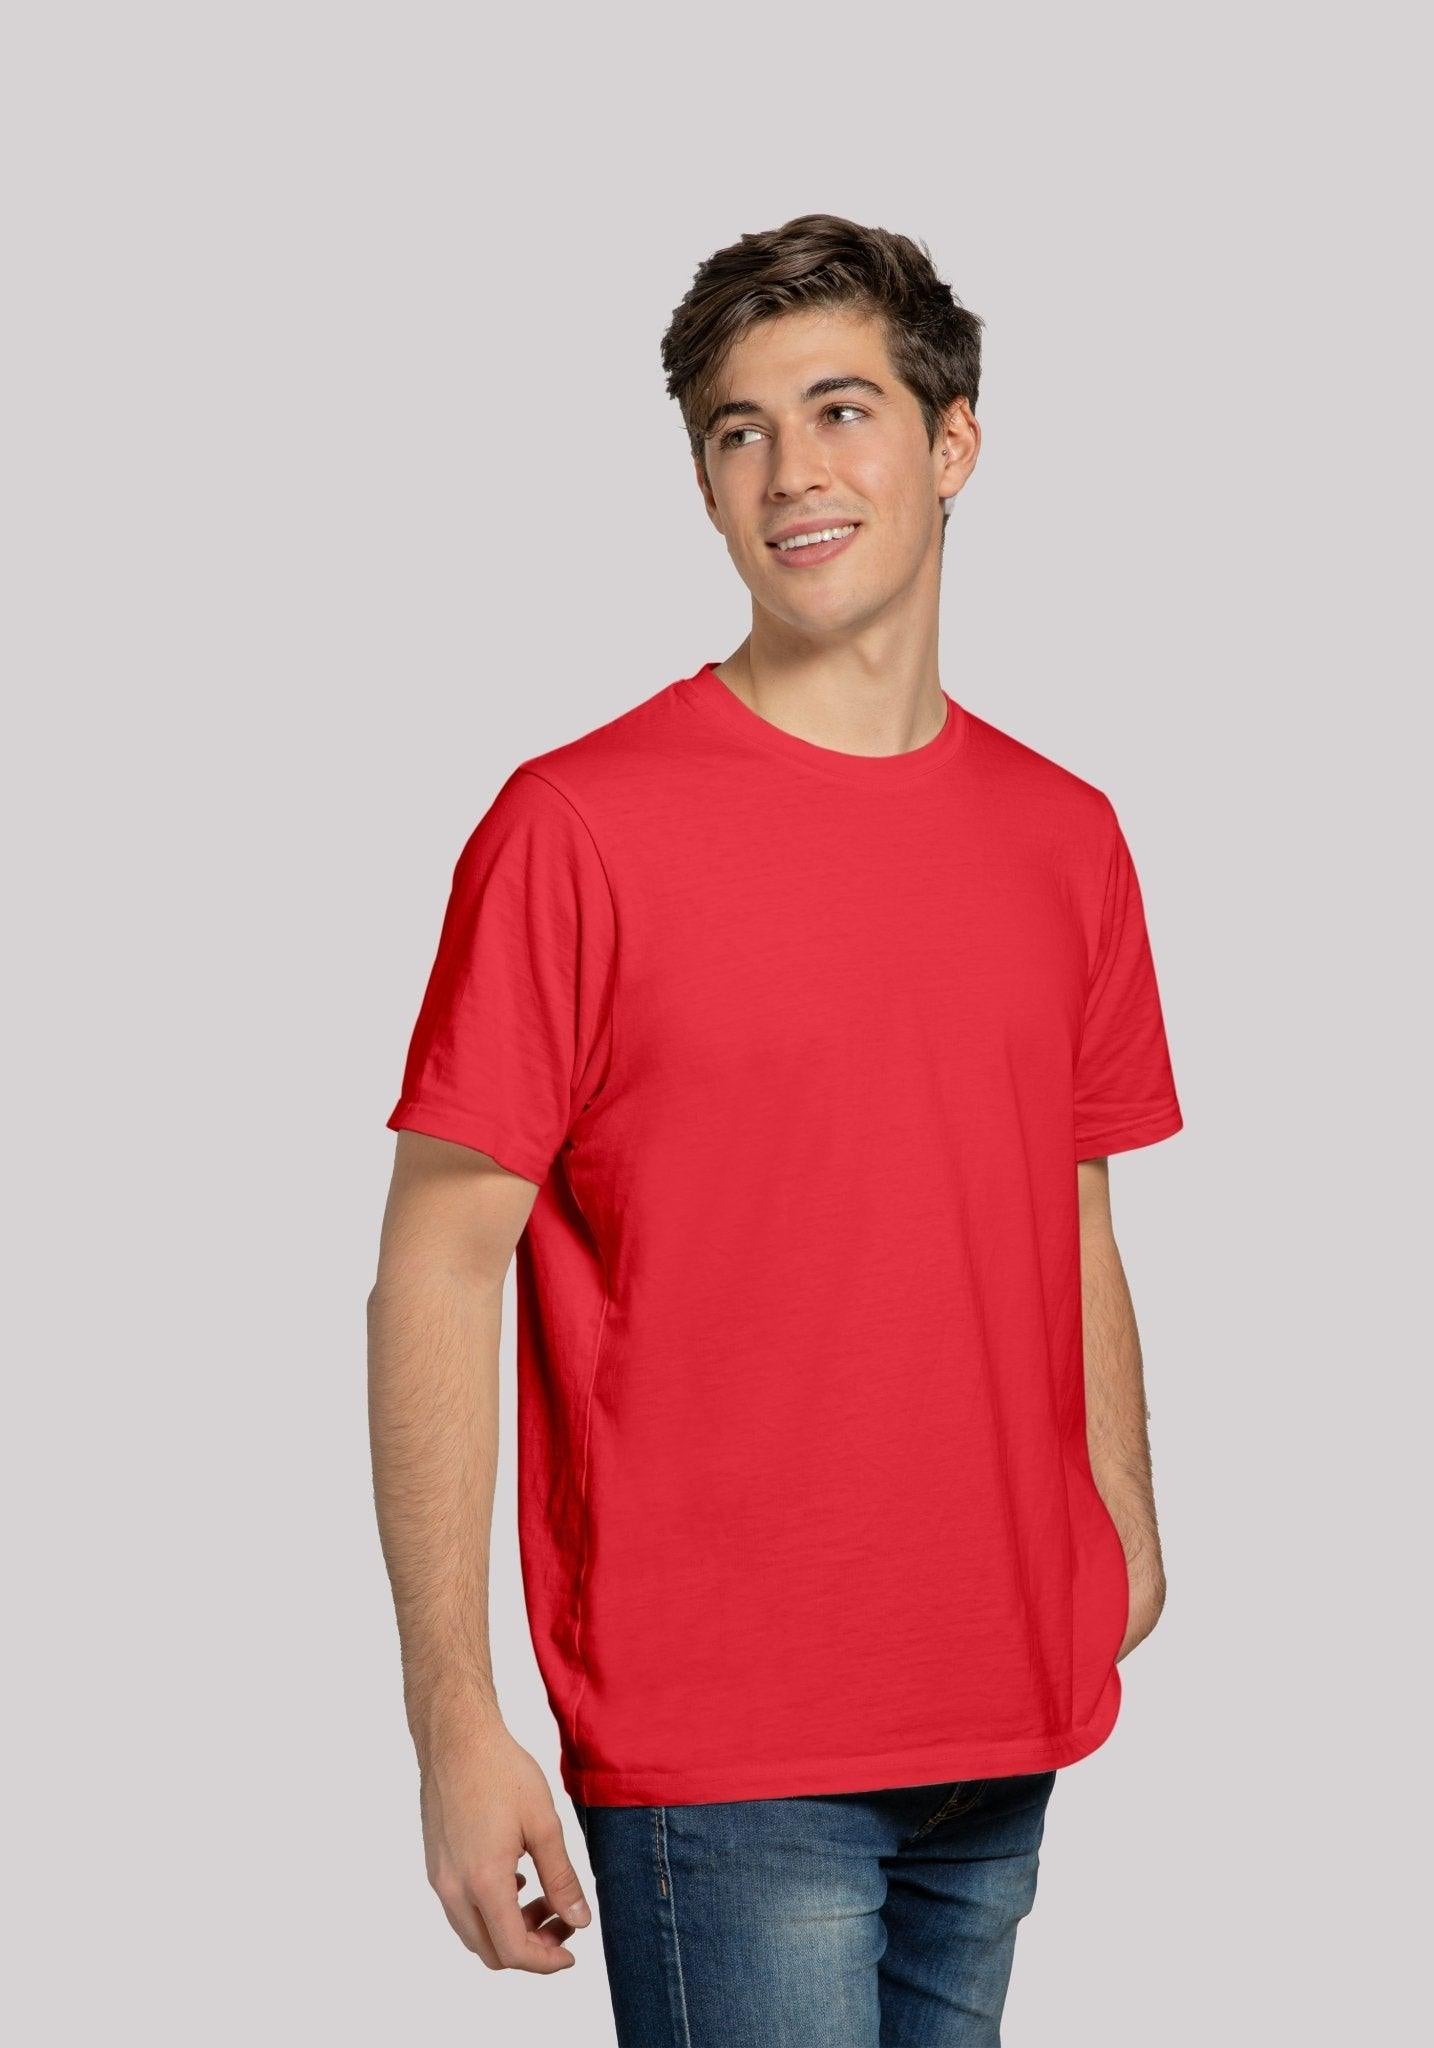 Solid Plain T Shirt Combo For Men In Crimson Red Colour Variant